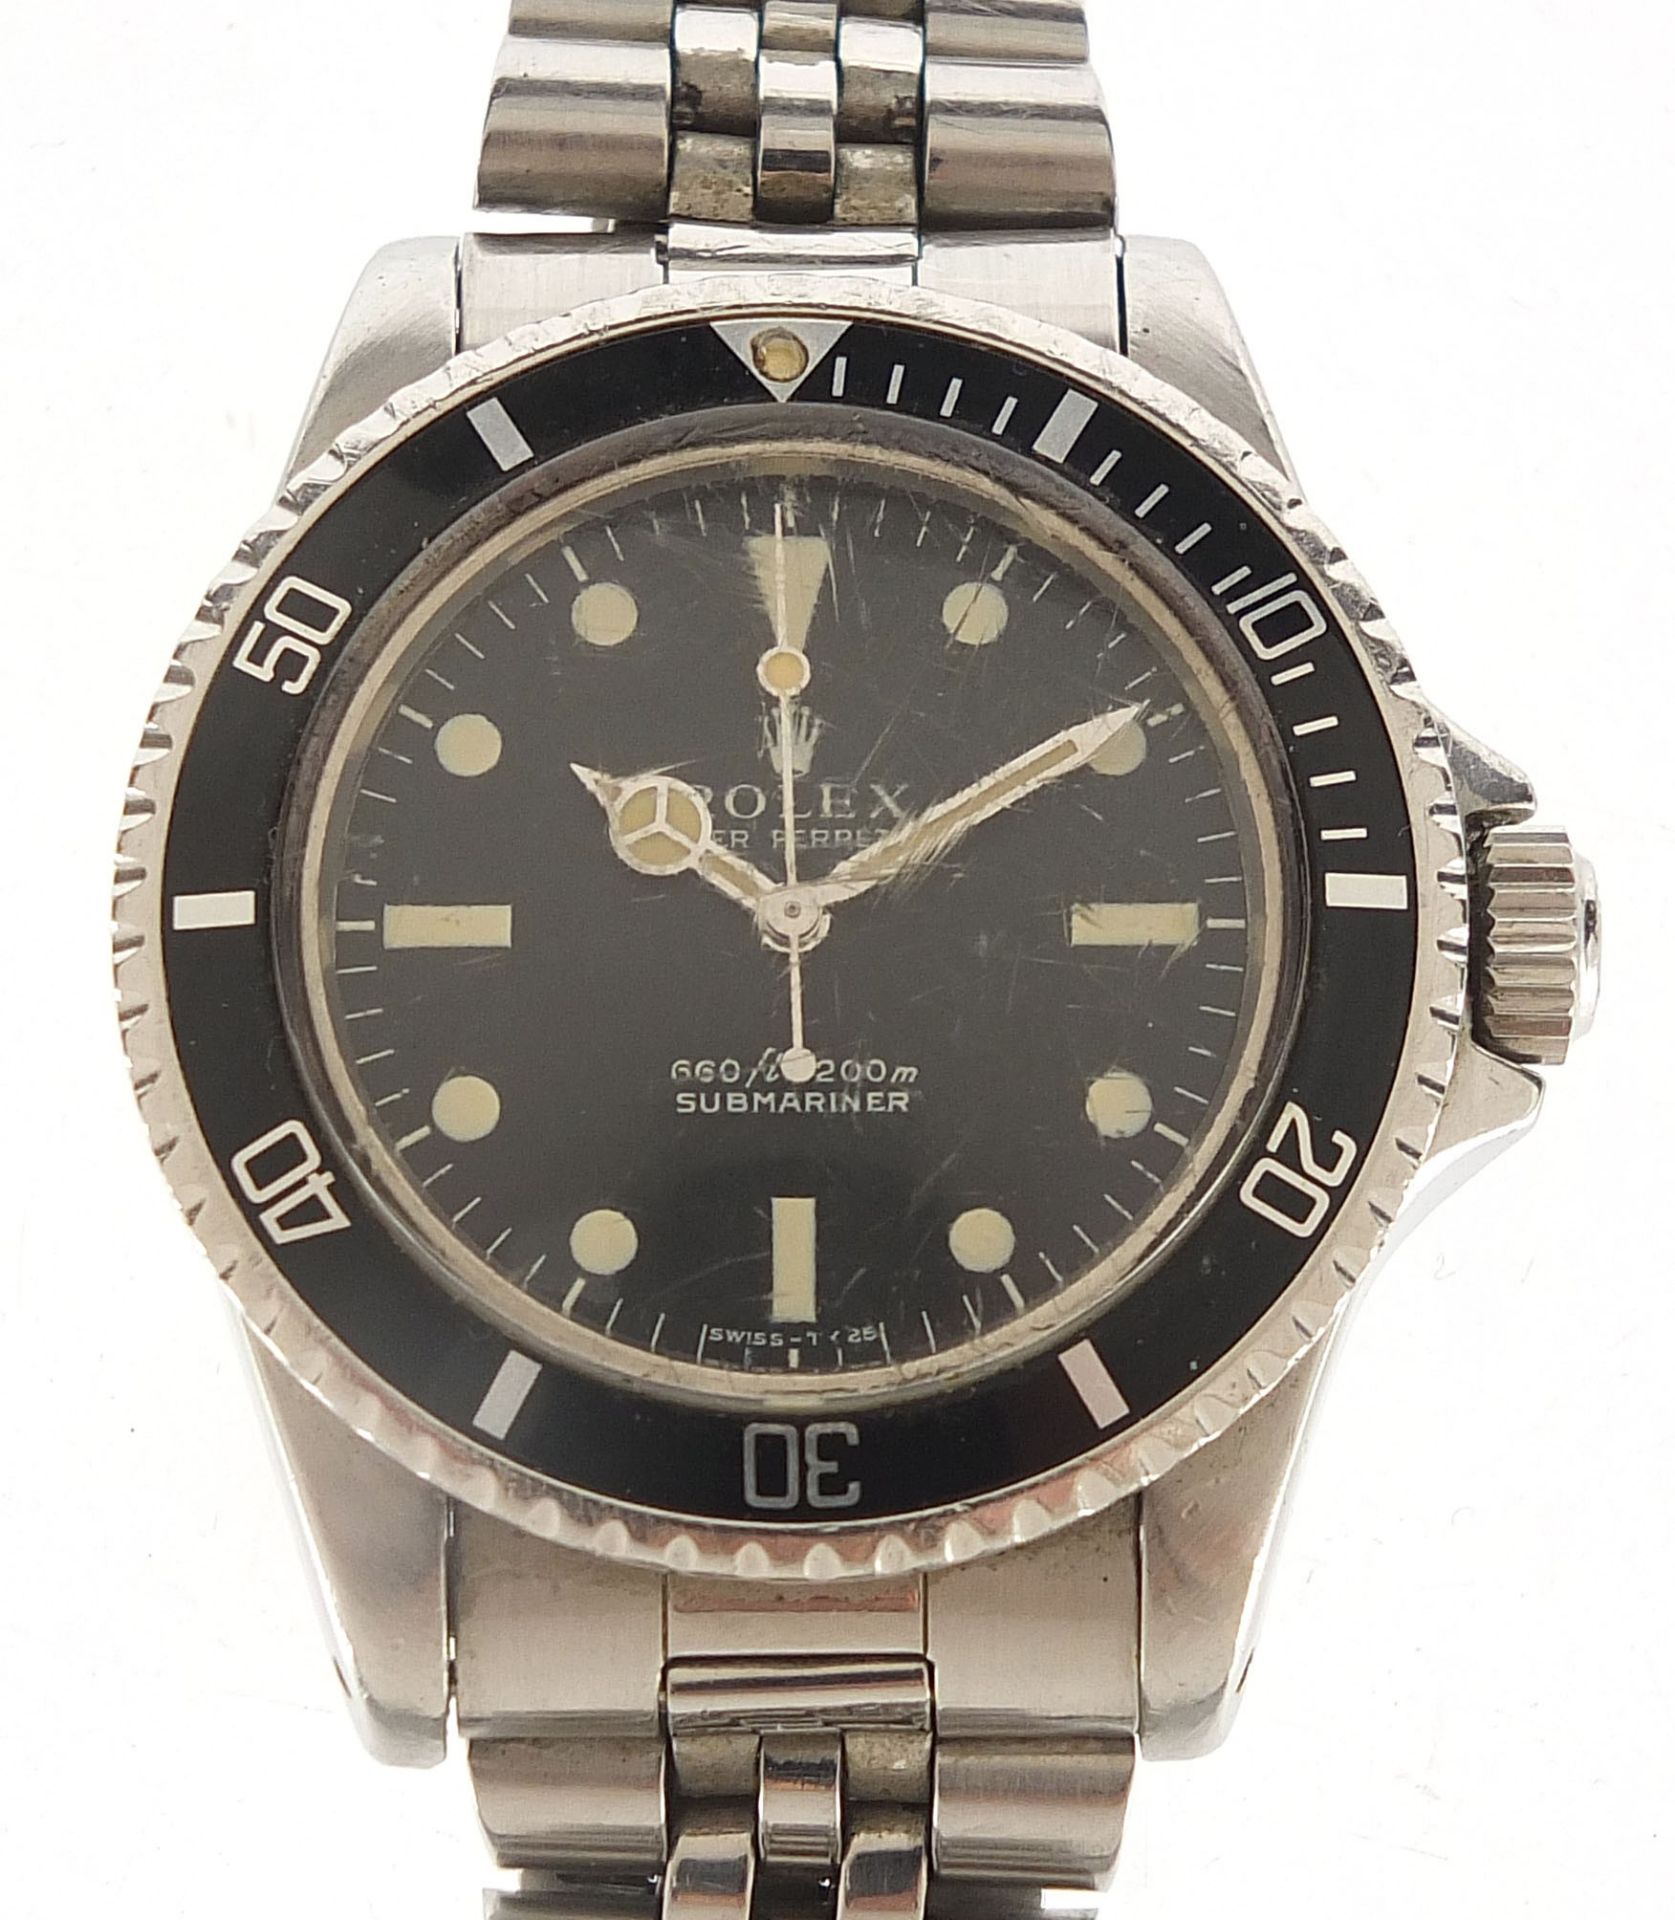 Rolex gentlemen's Submariner automatic wristwatch, ref 5513, serial number 1005684, 40mm in diameter